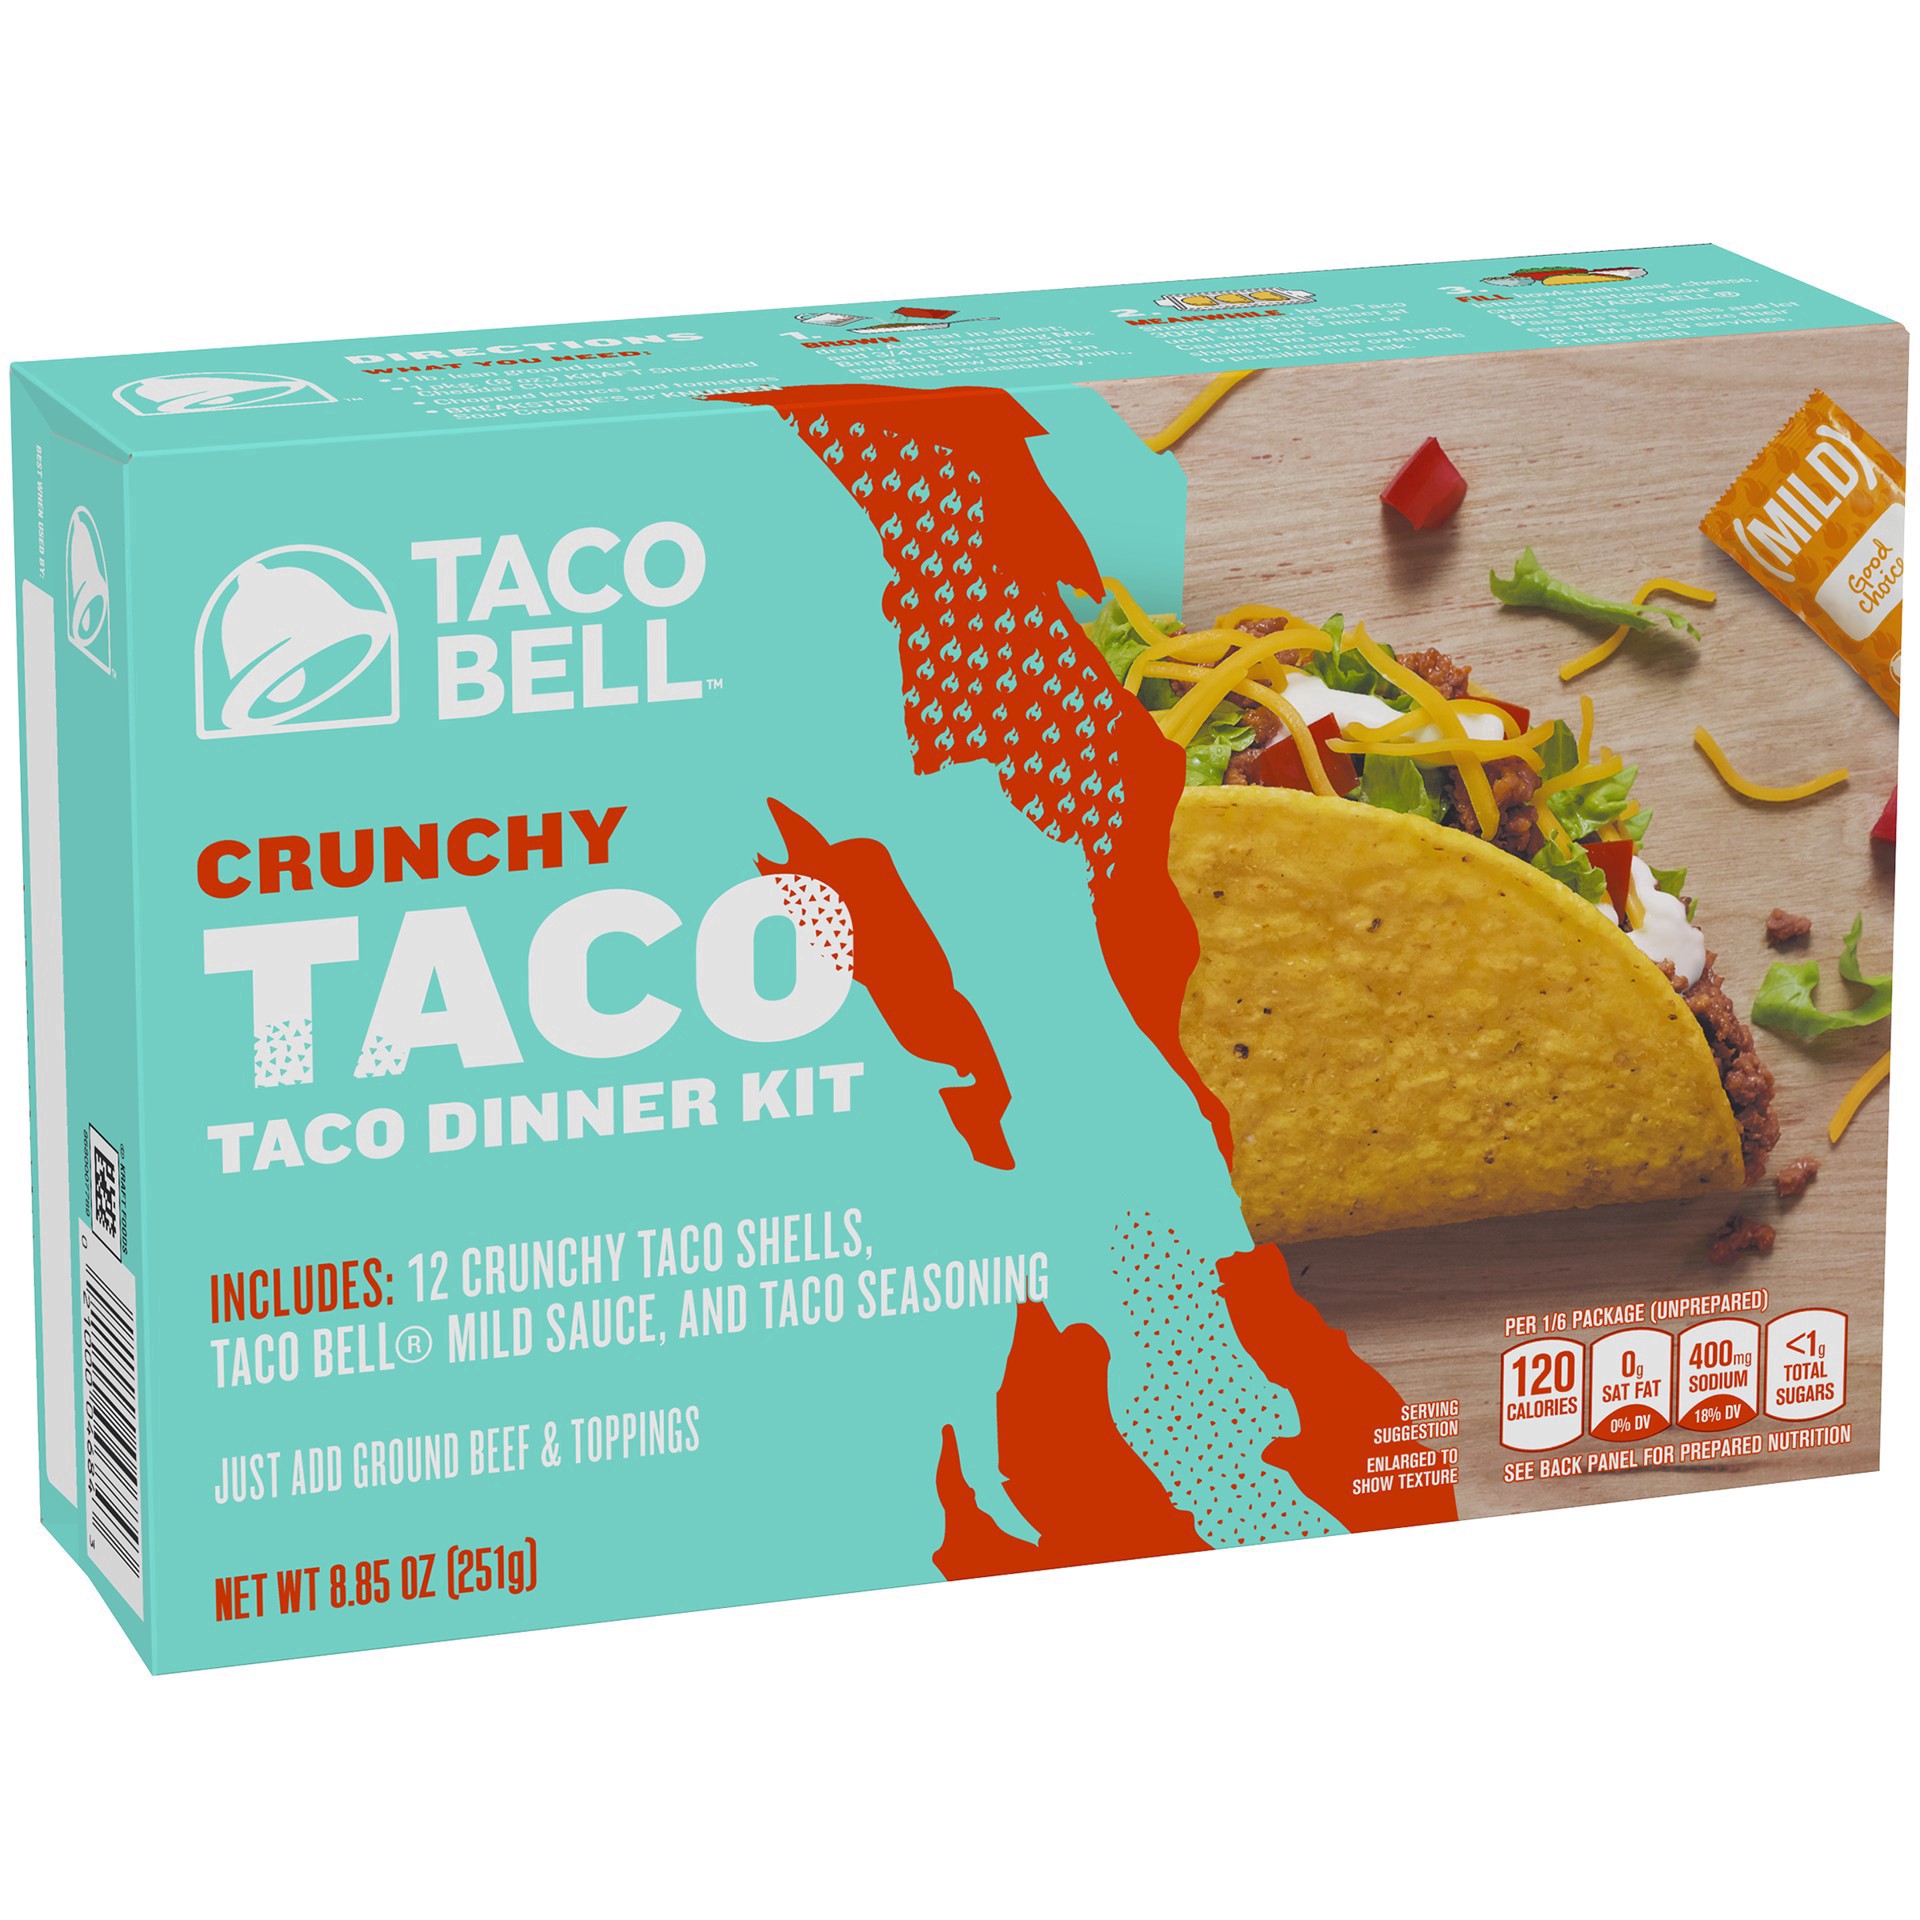 slide 20 of 91, Taco Bell Crunchy Taco Cravings Kit with 12 Crunchy Taco Shells, Taco Bell Mild Sauce & Seasoning, 8.85 oz Box, 1 ct